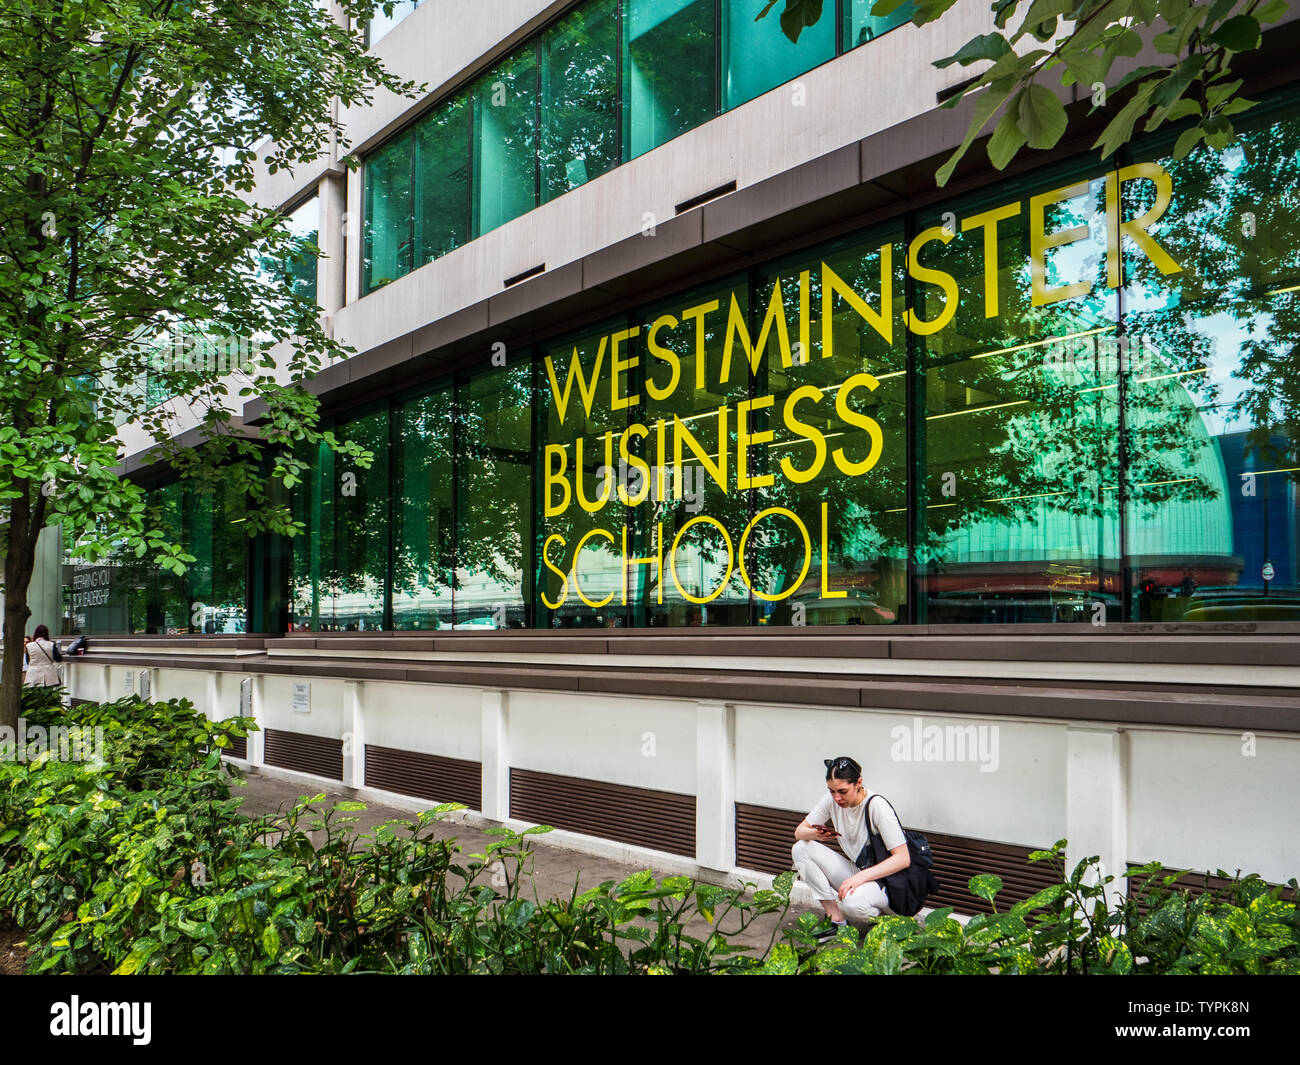 Westminster Business School on Marylebone Road London UK. Westminster Business School (WBS) is the business school of the University of Westminster. Stock Photo